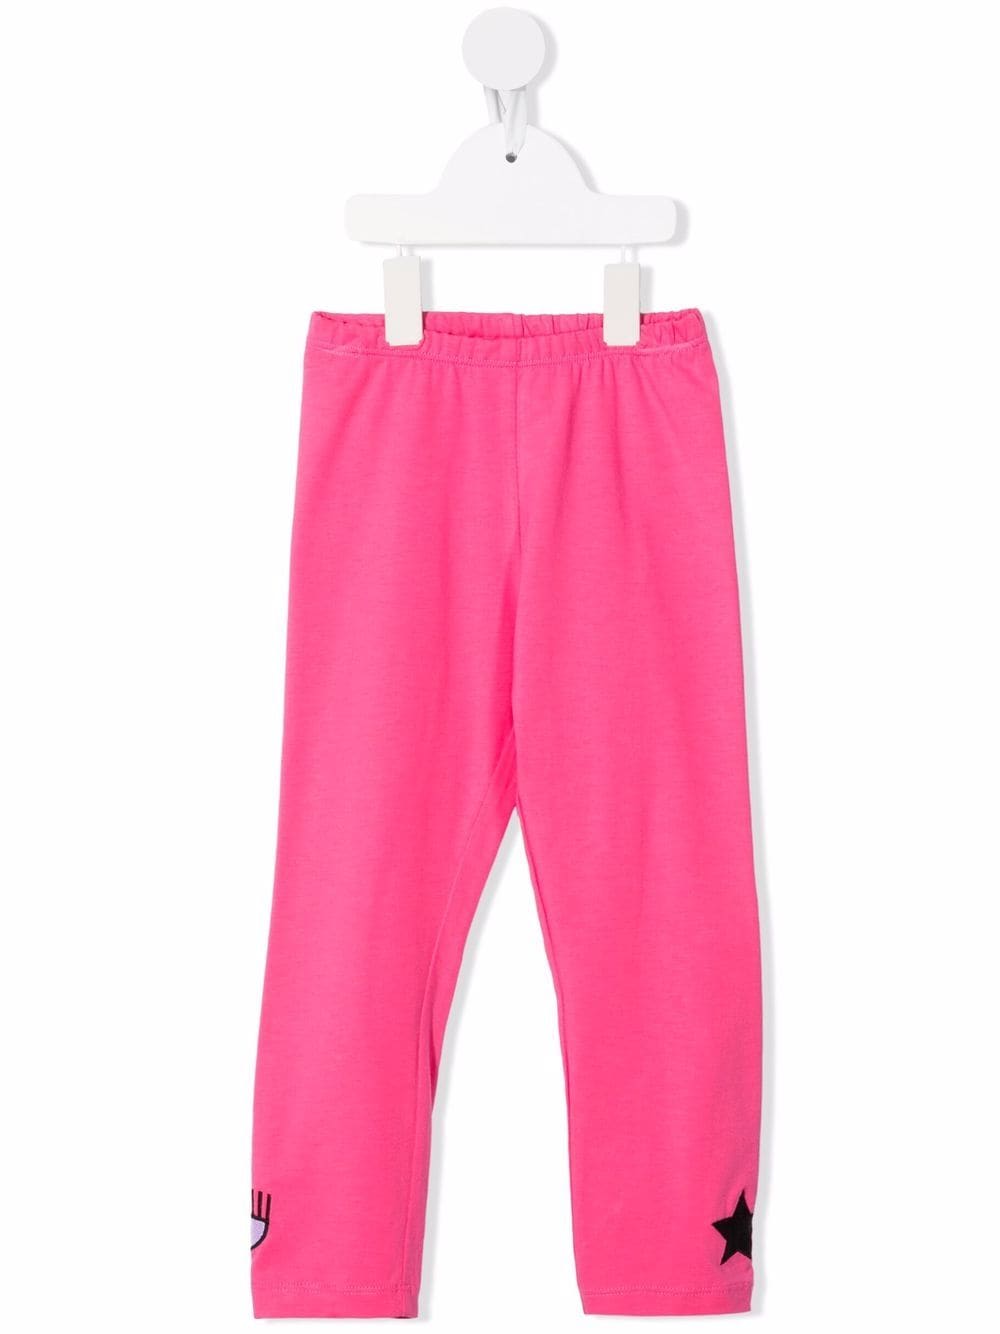 Chiara Ferragni Kids star print stretch leggings - Pink von Chiara Ferragni Kids